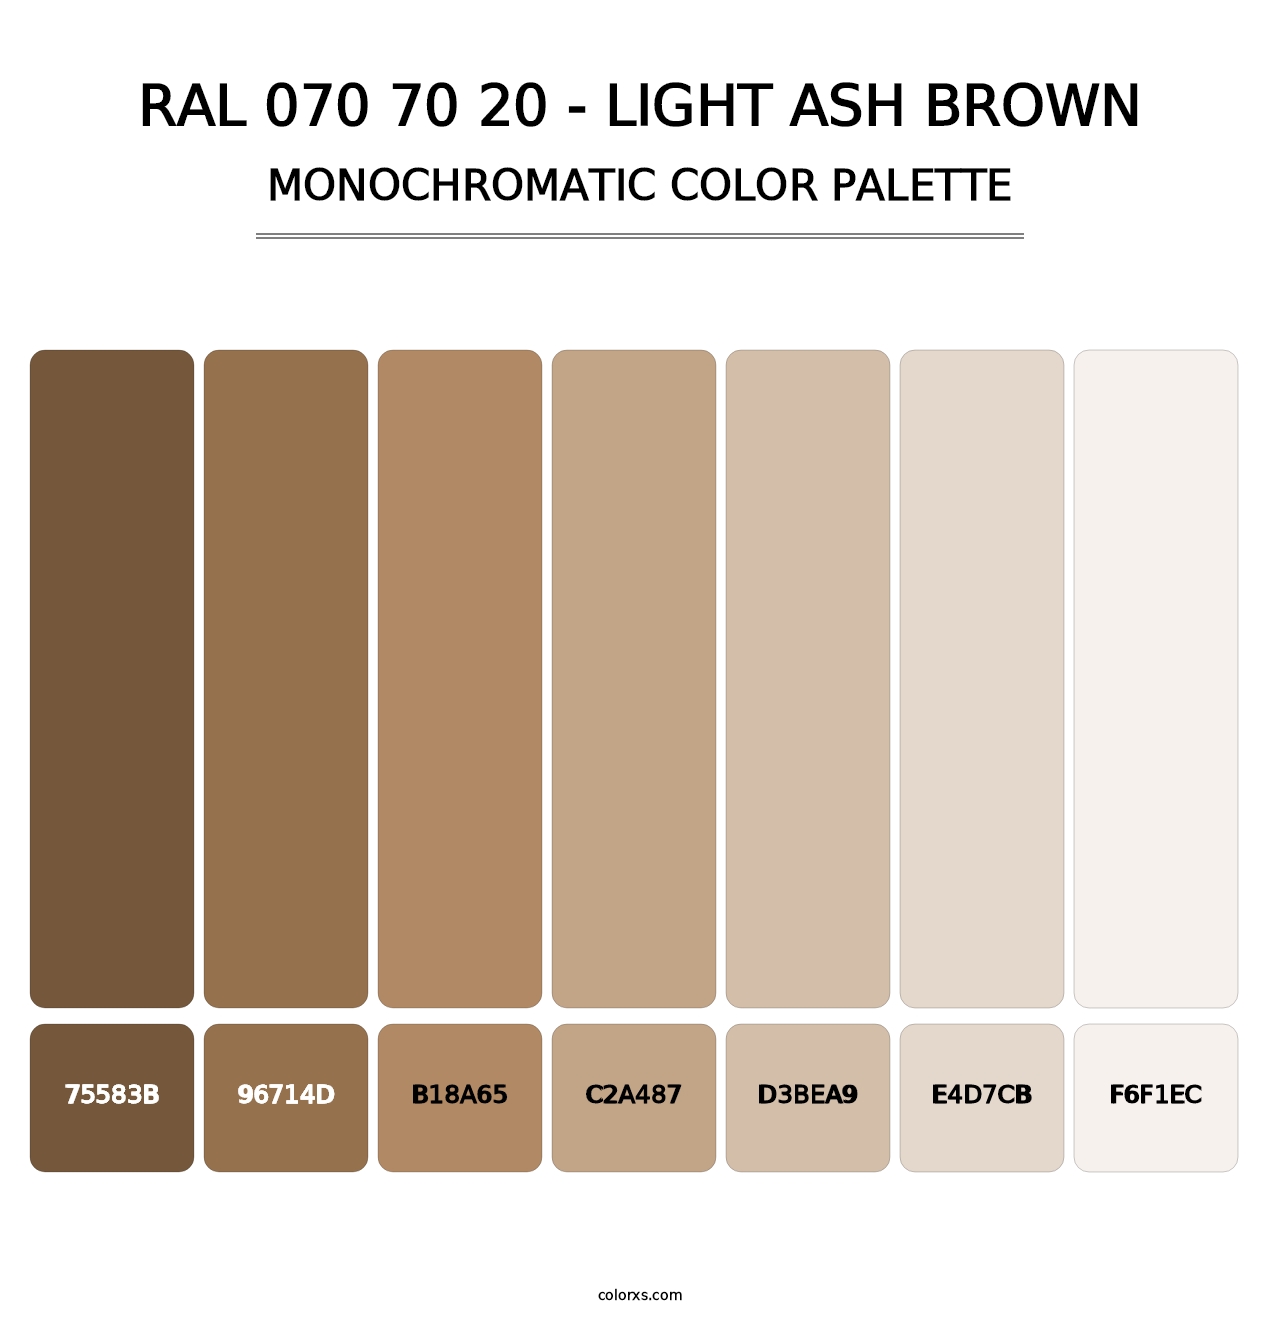 RAL 070 70 20 - Light Ash Brown - Monochromatic Color Palette